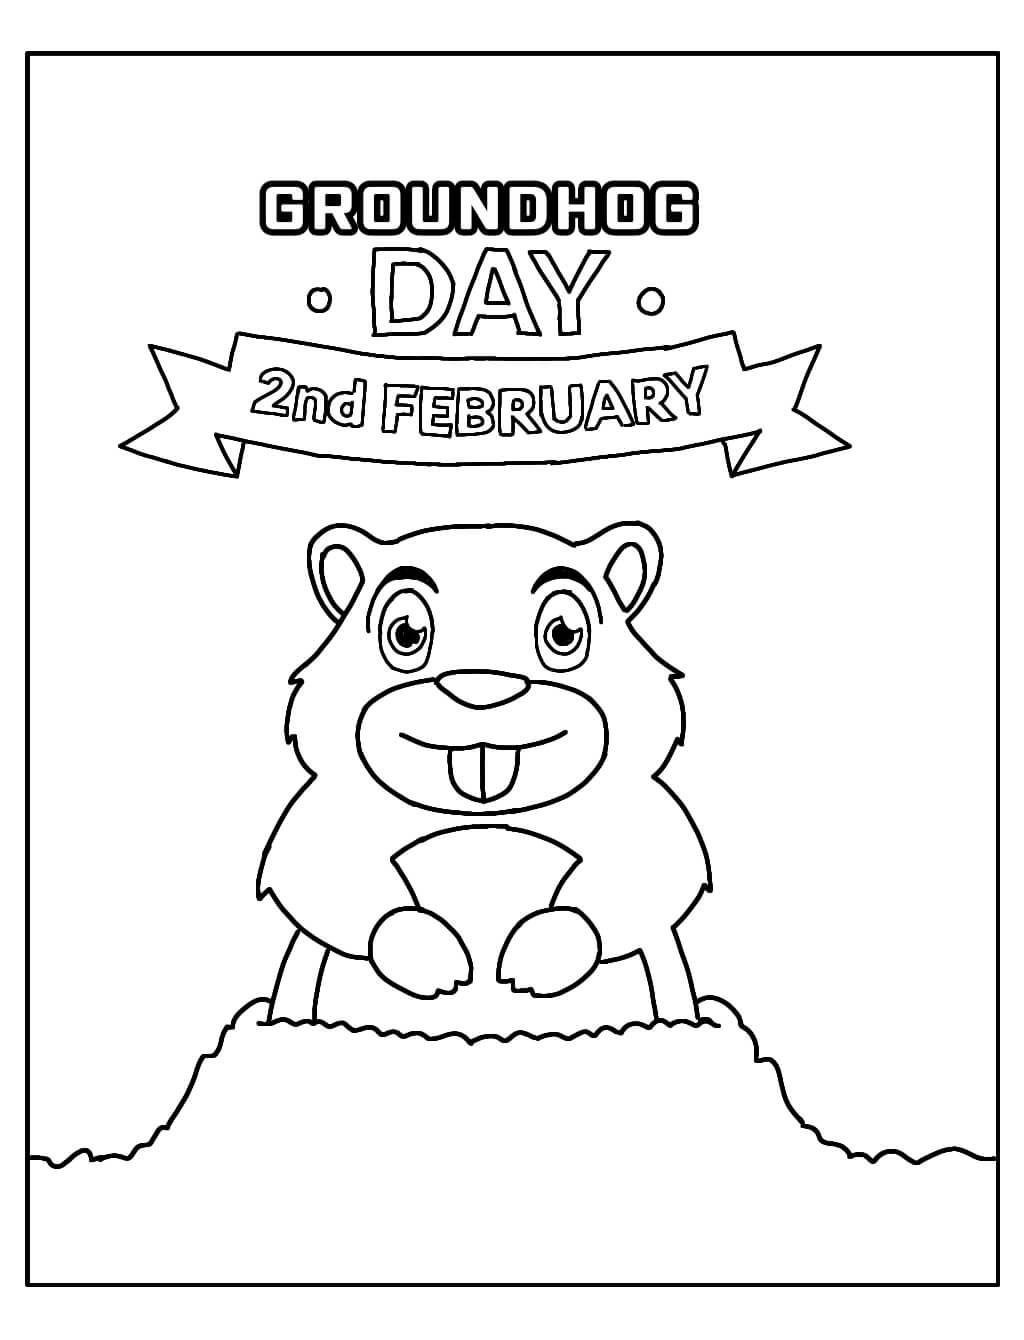 groundhog day 2 February